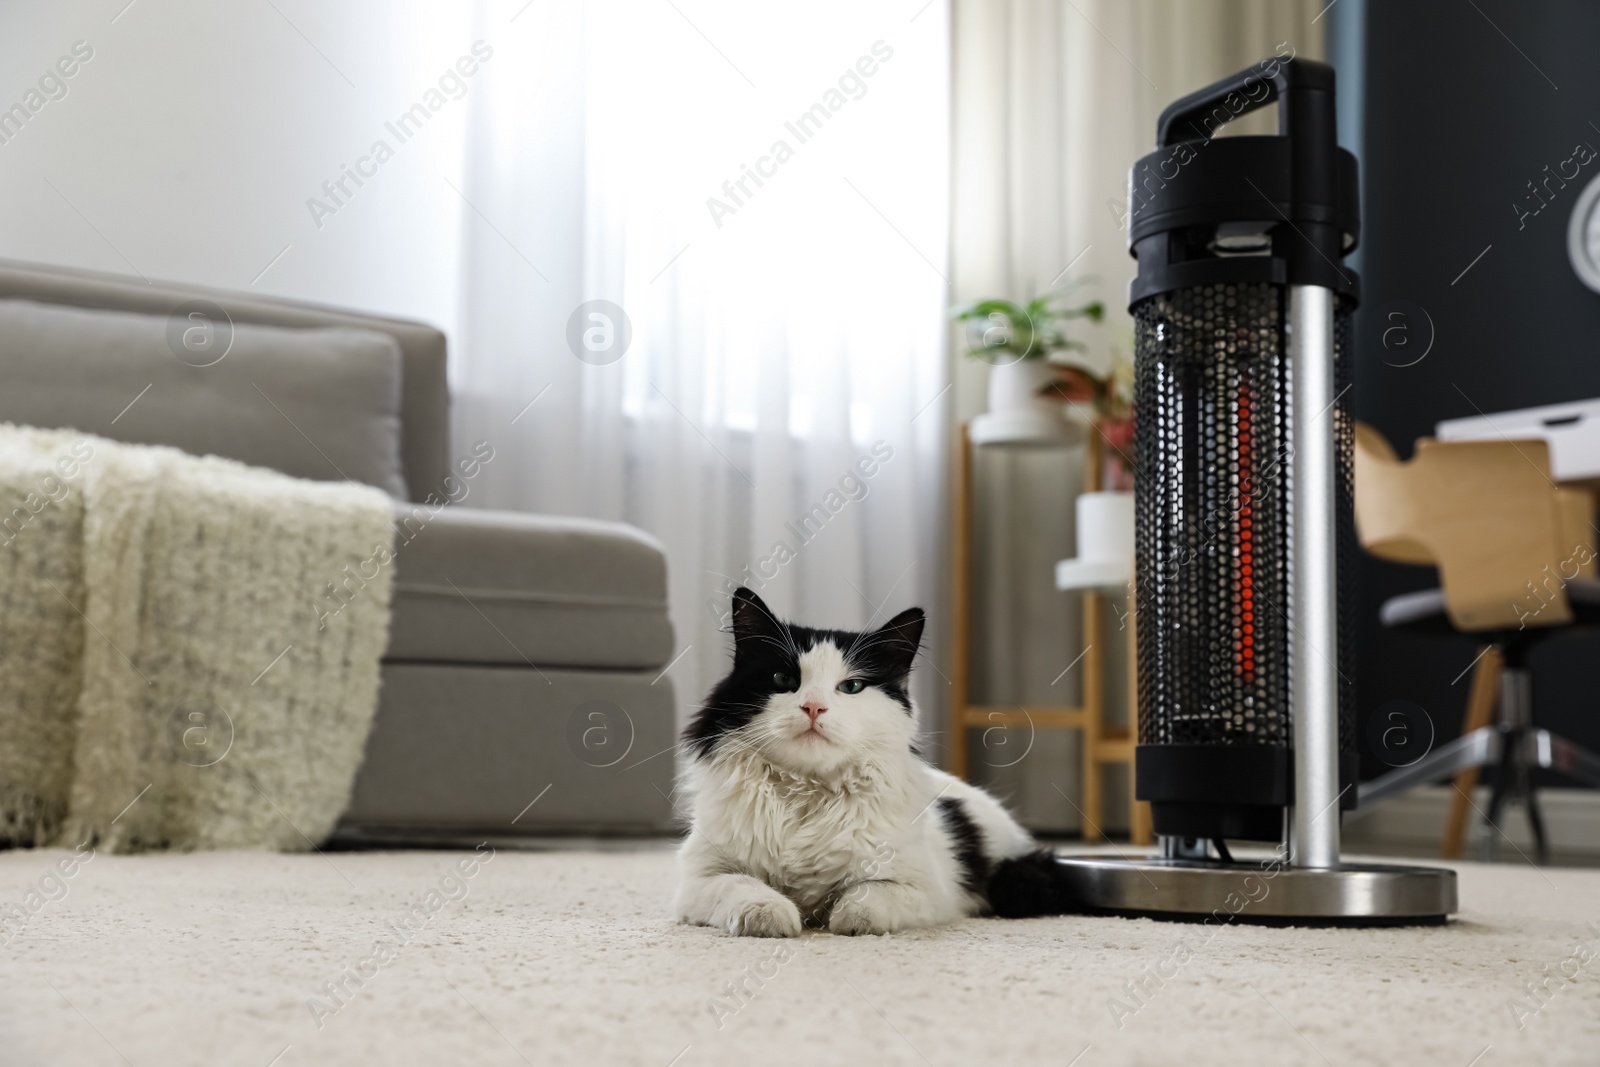 Photo of Cat near modern electric halogen heater on floor in living room